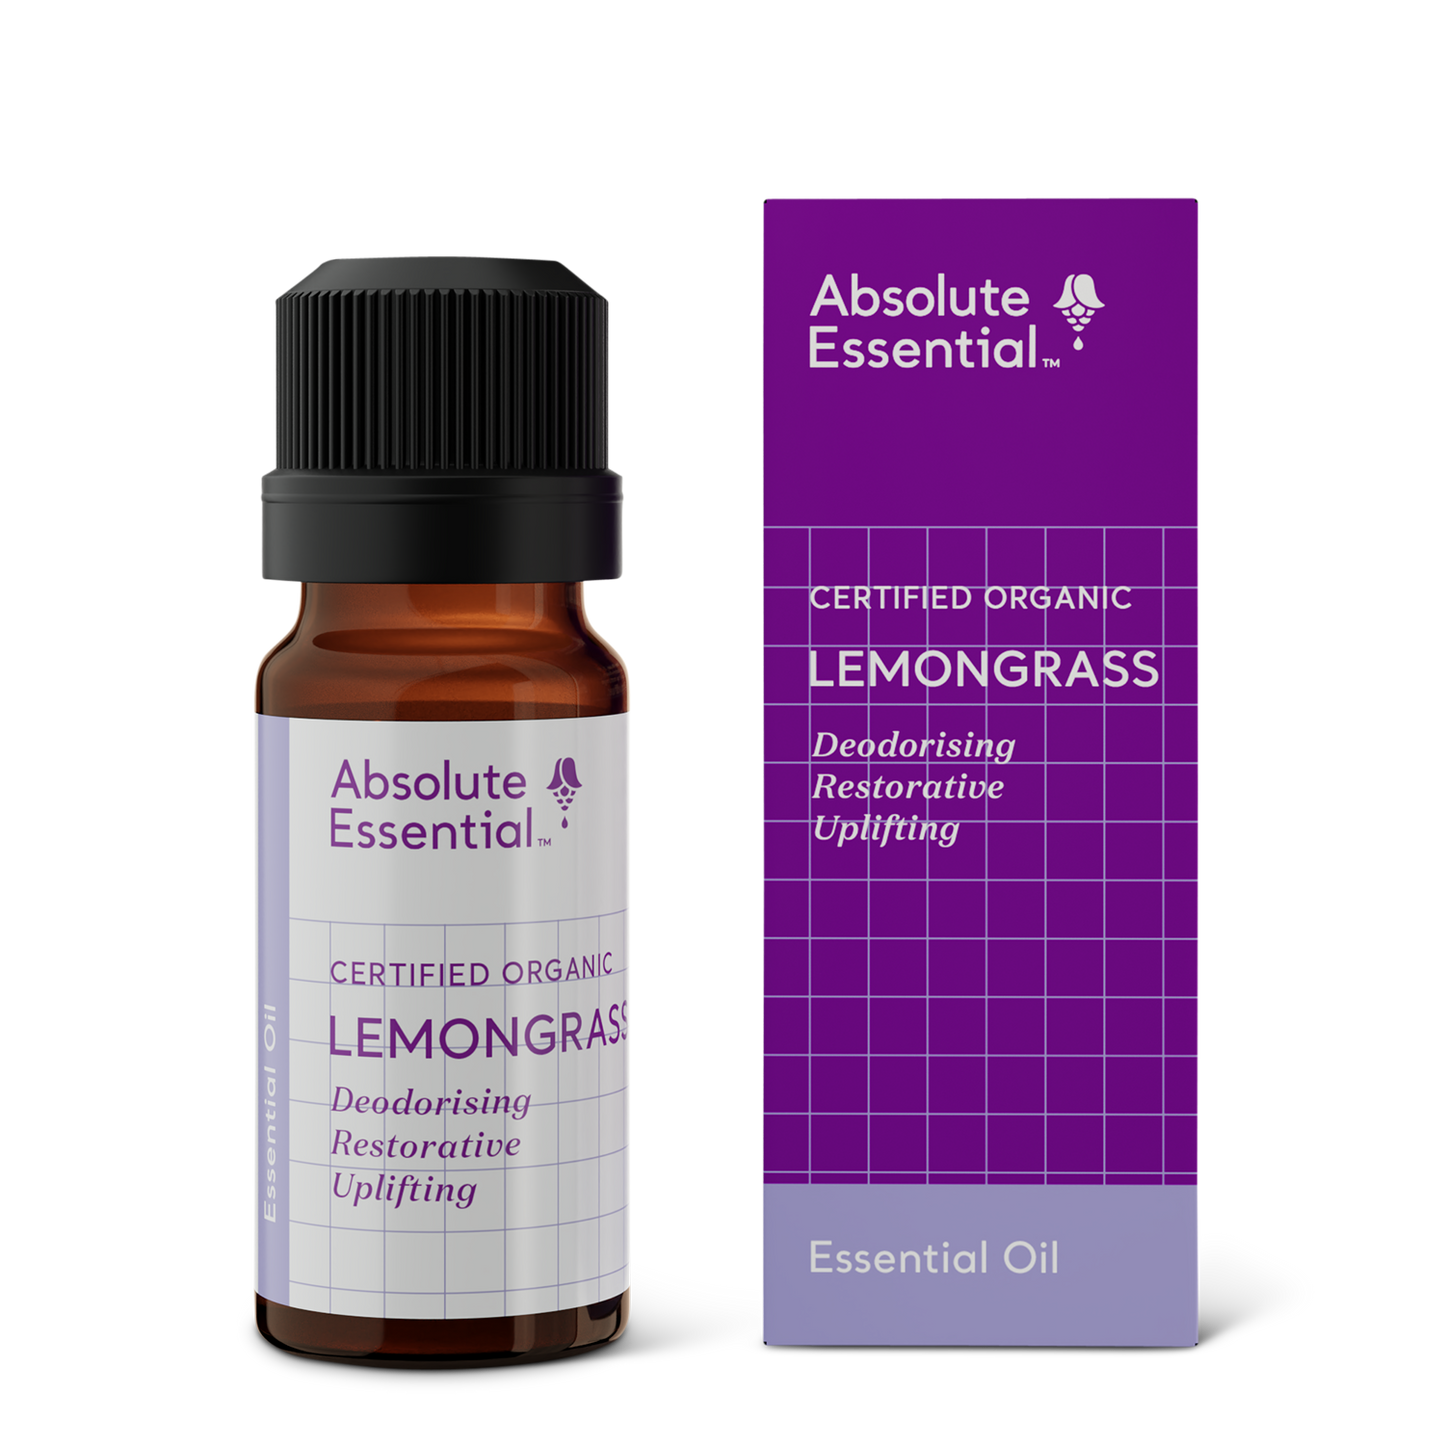 Lemongrass Essential Oil — ChemScentsations Body Products